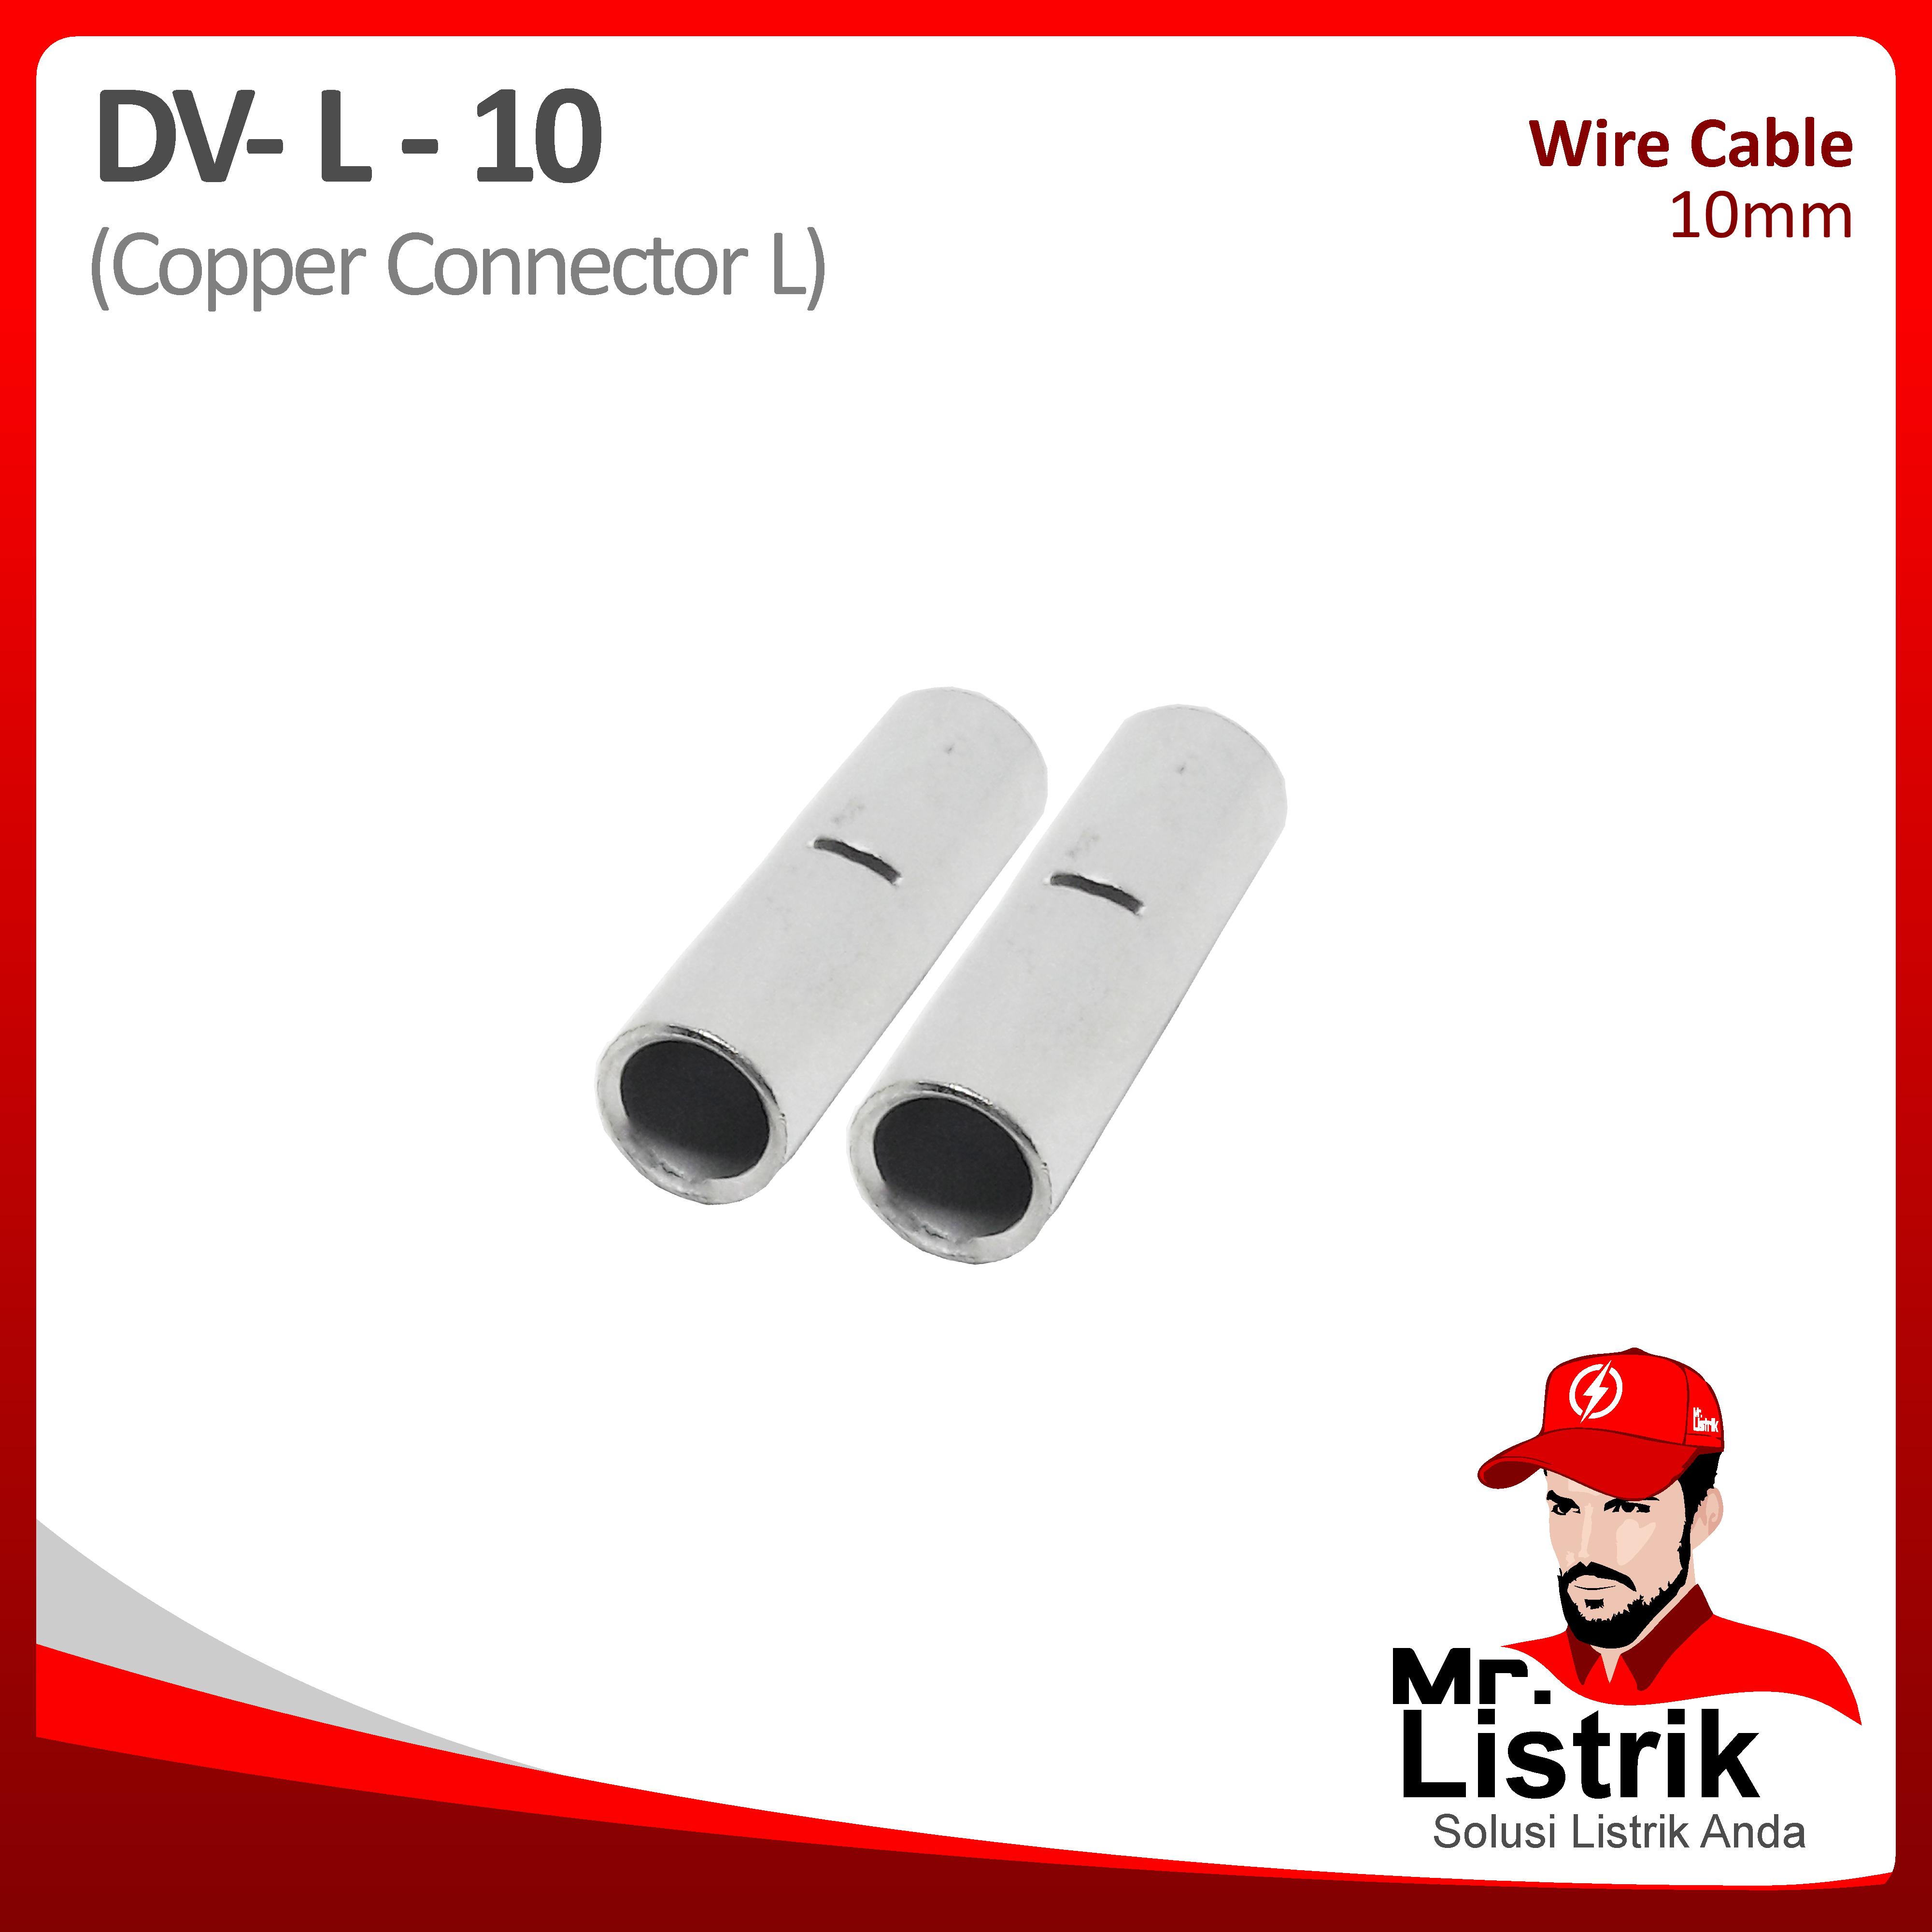 Copper Connector-L 10mm DV L-10